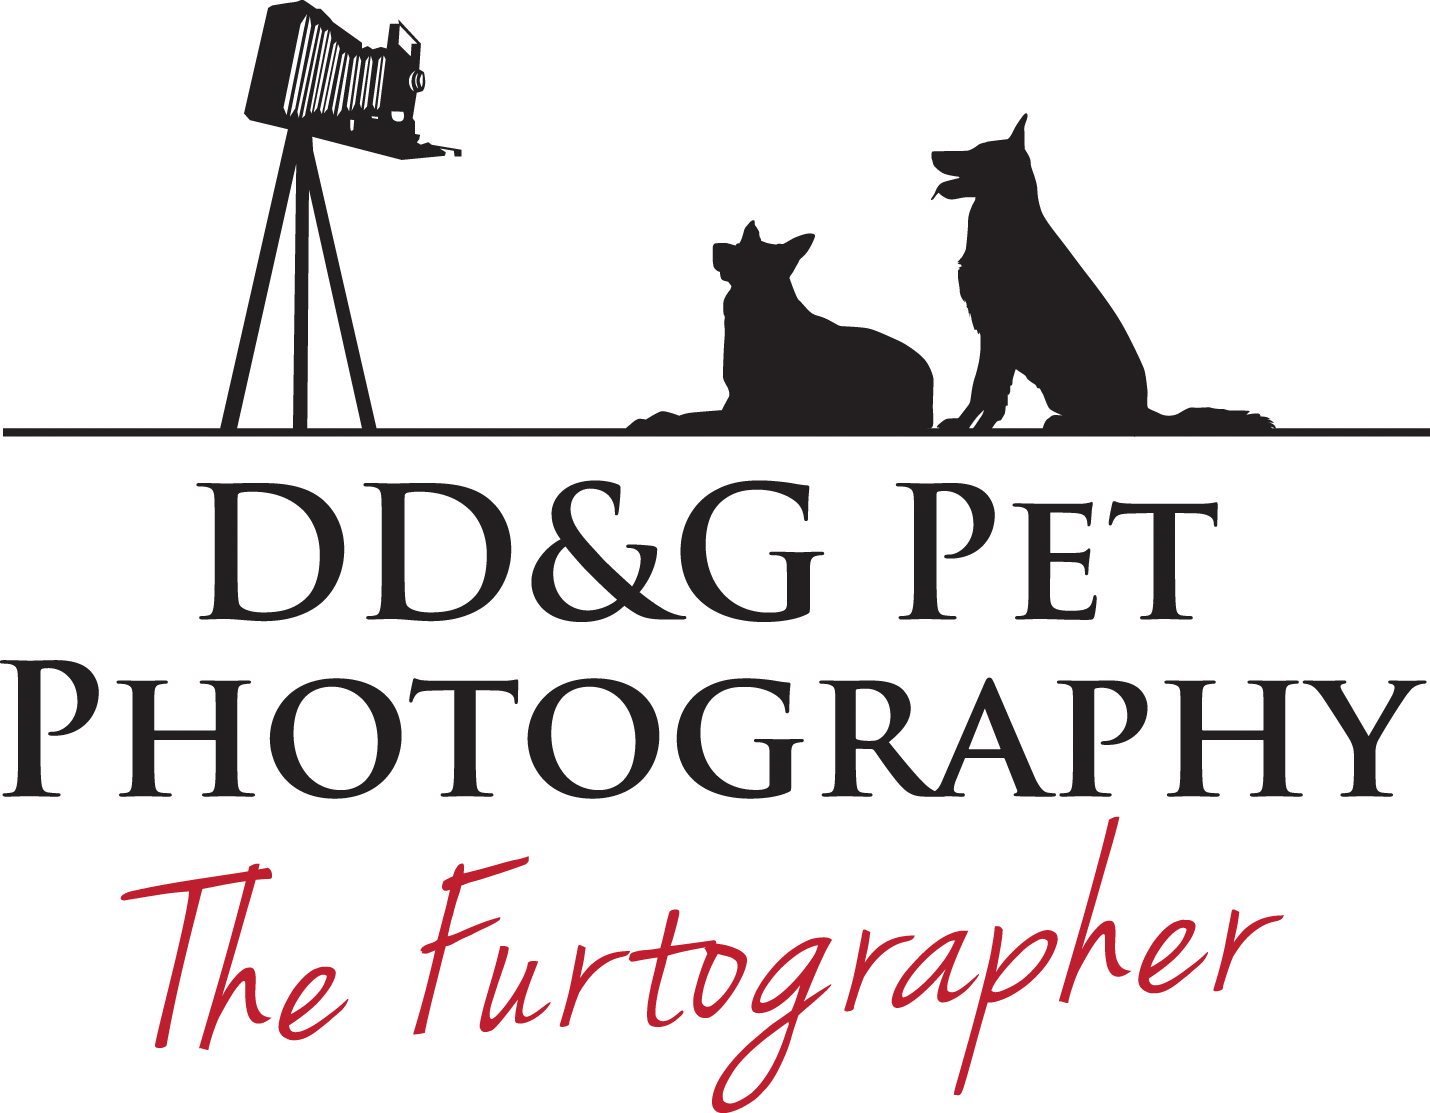 DD&G Pet Photography